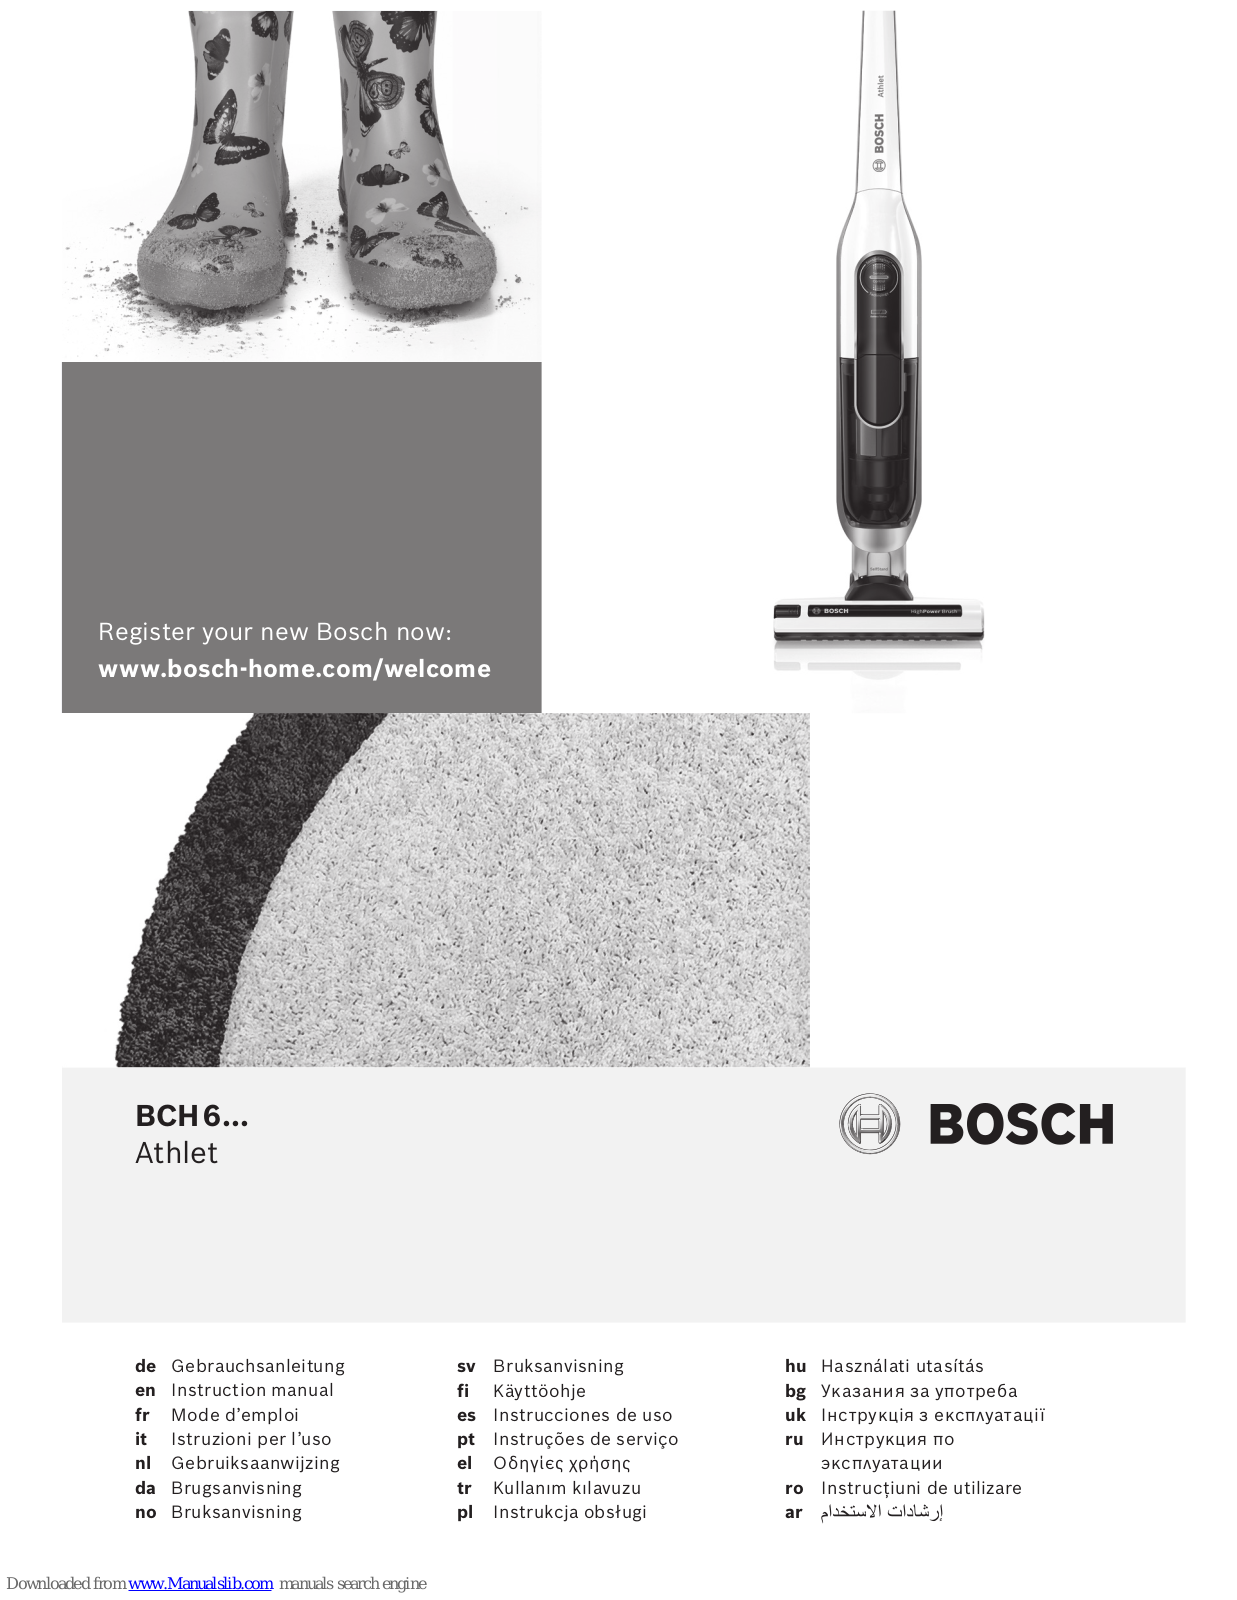 Bosch BCH6, Athlet Instruction Manual